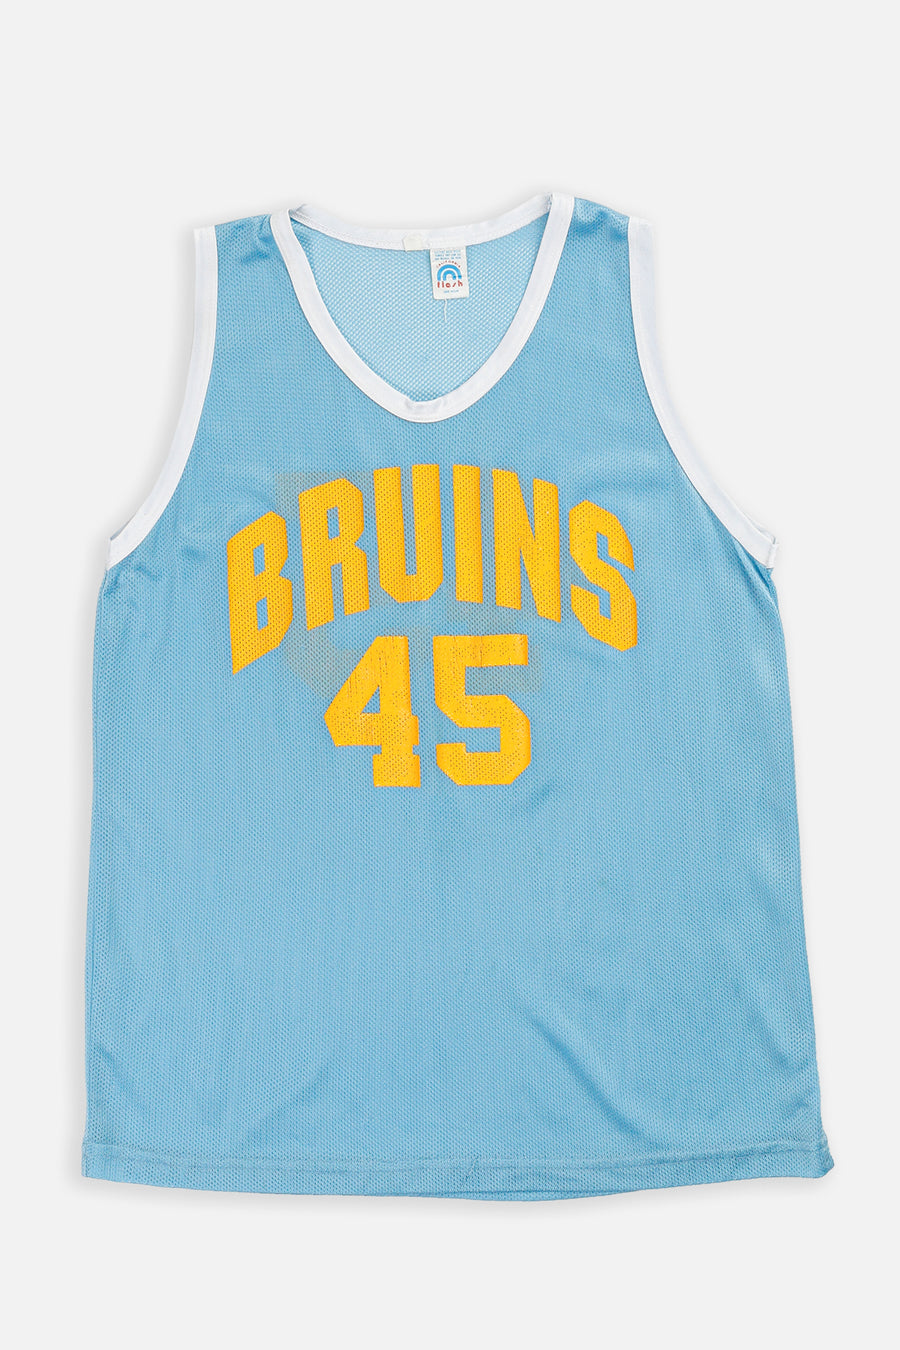 Vintage UCLA Bruins NCAA Jersey - S